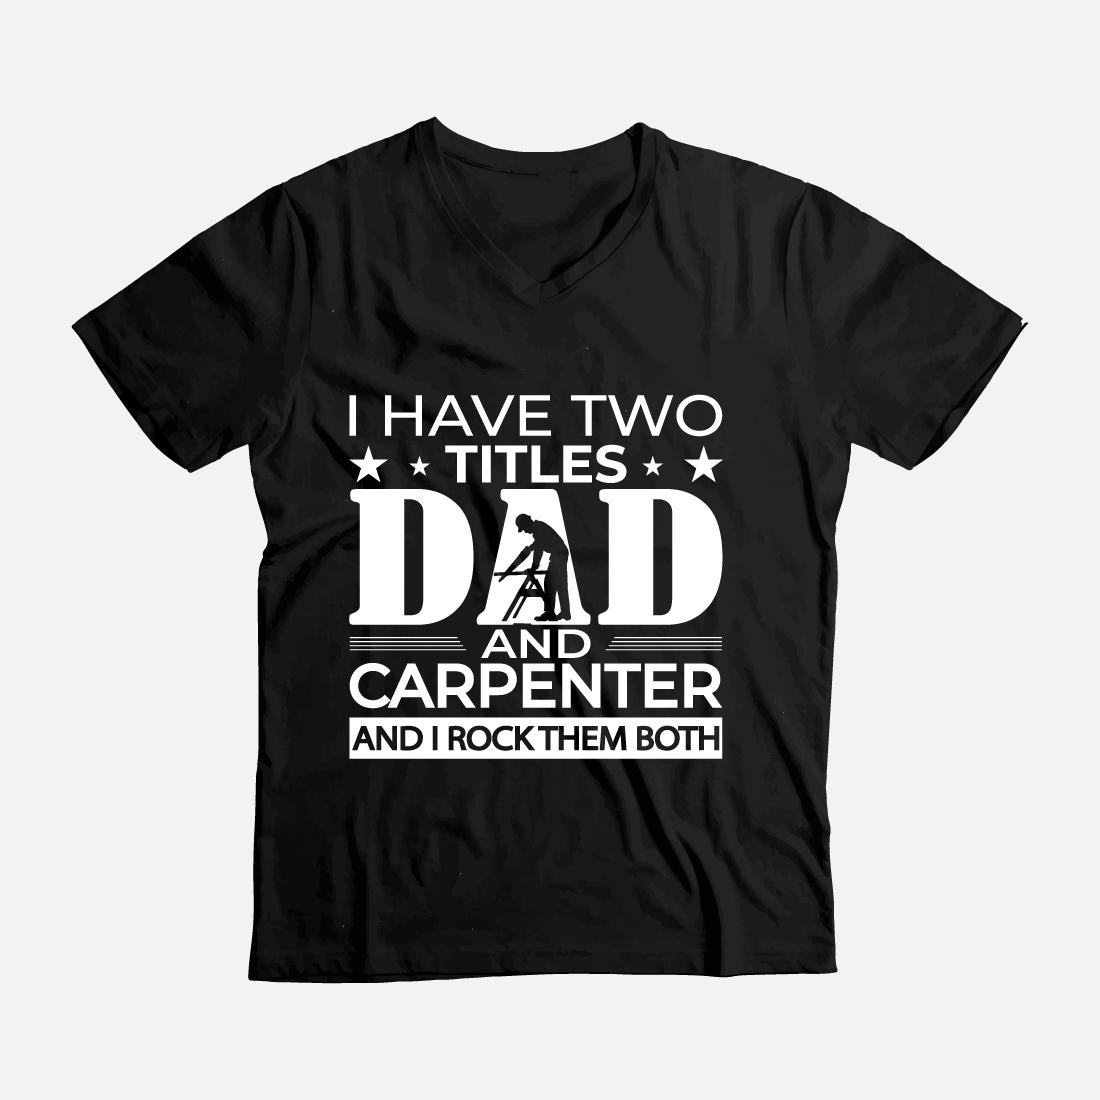 Carpenter dad t-shirt design preview image.